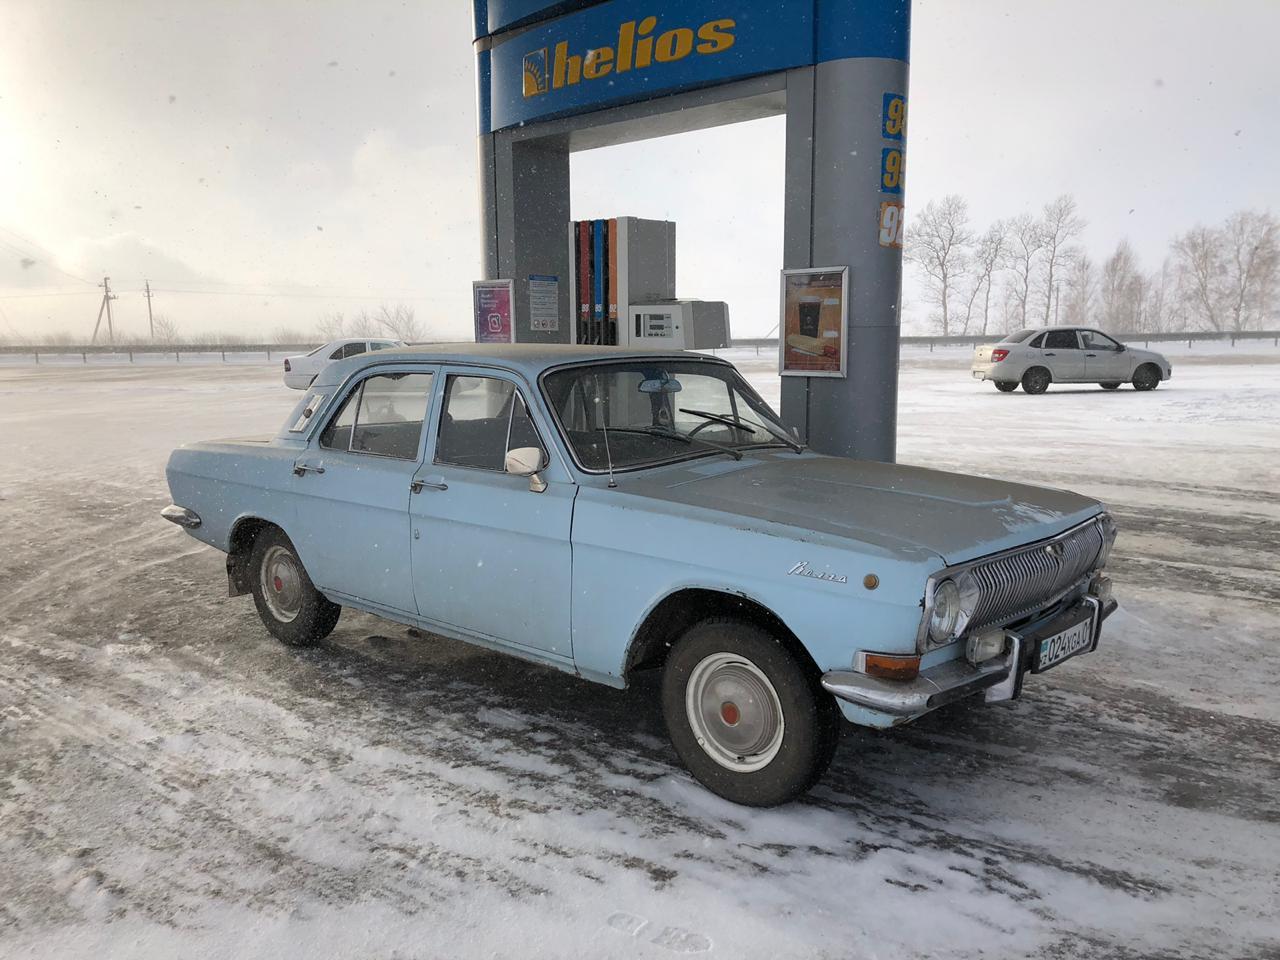 What do you think of this Volga? LowRider style - My, Volga, Lowrider, Tuning, Auto, Video, Longpost